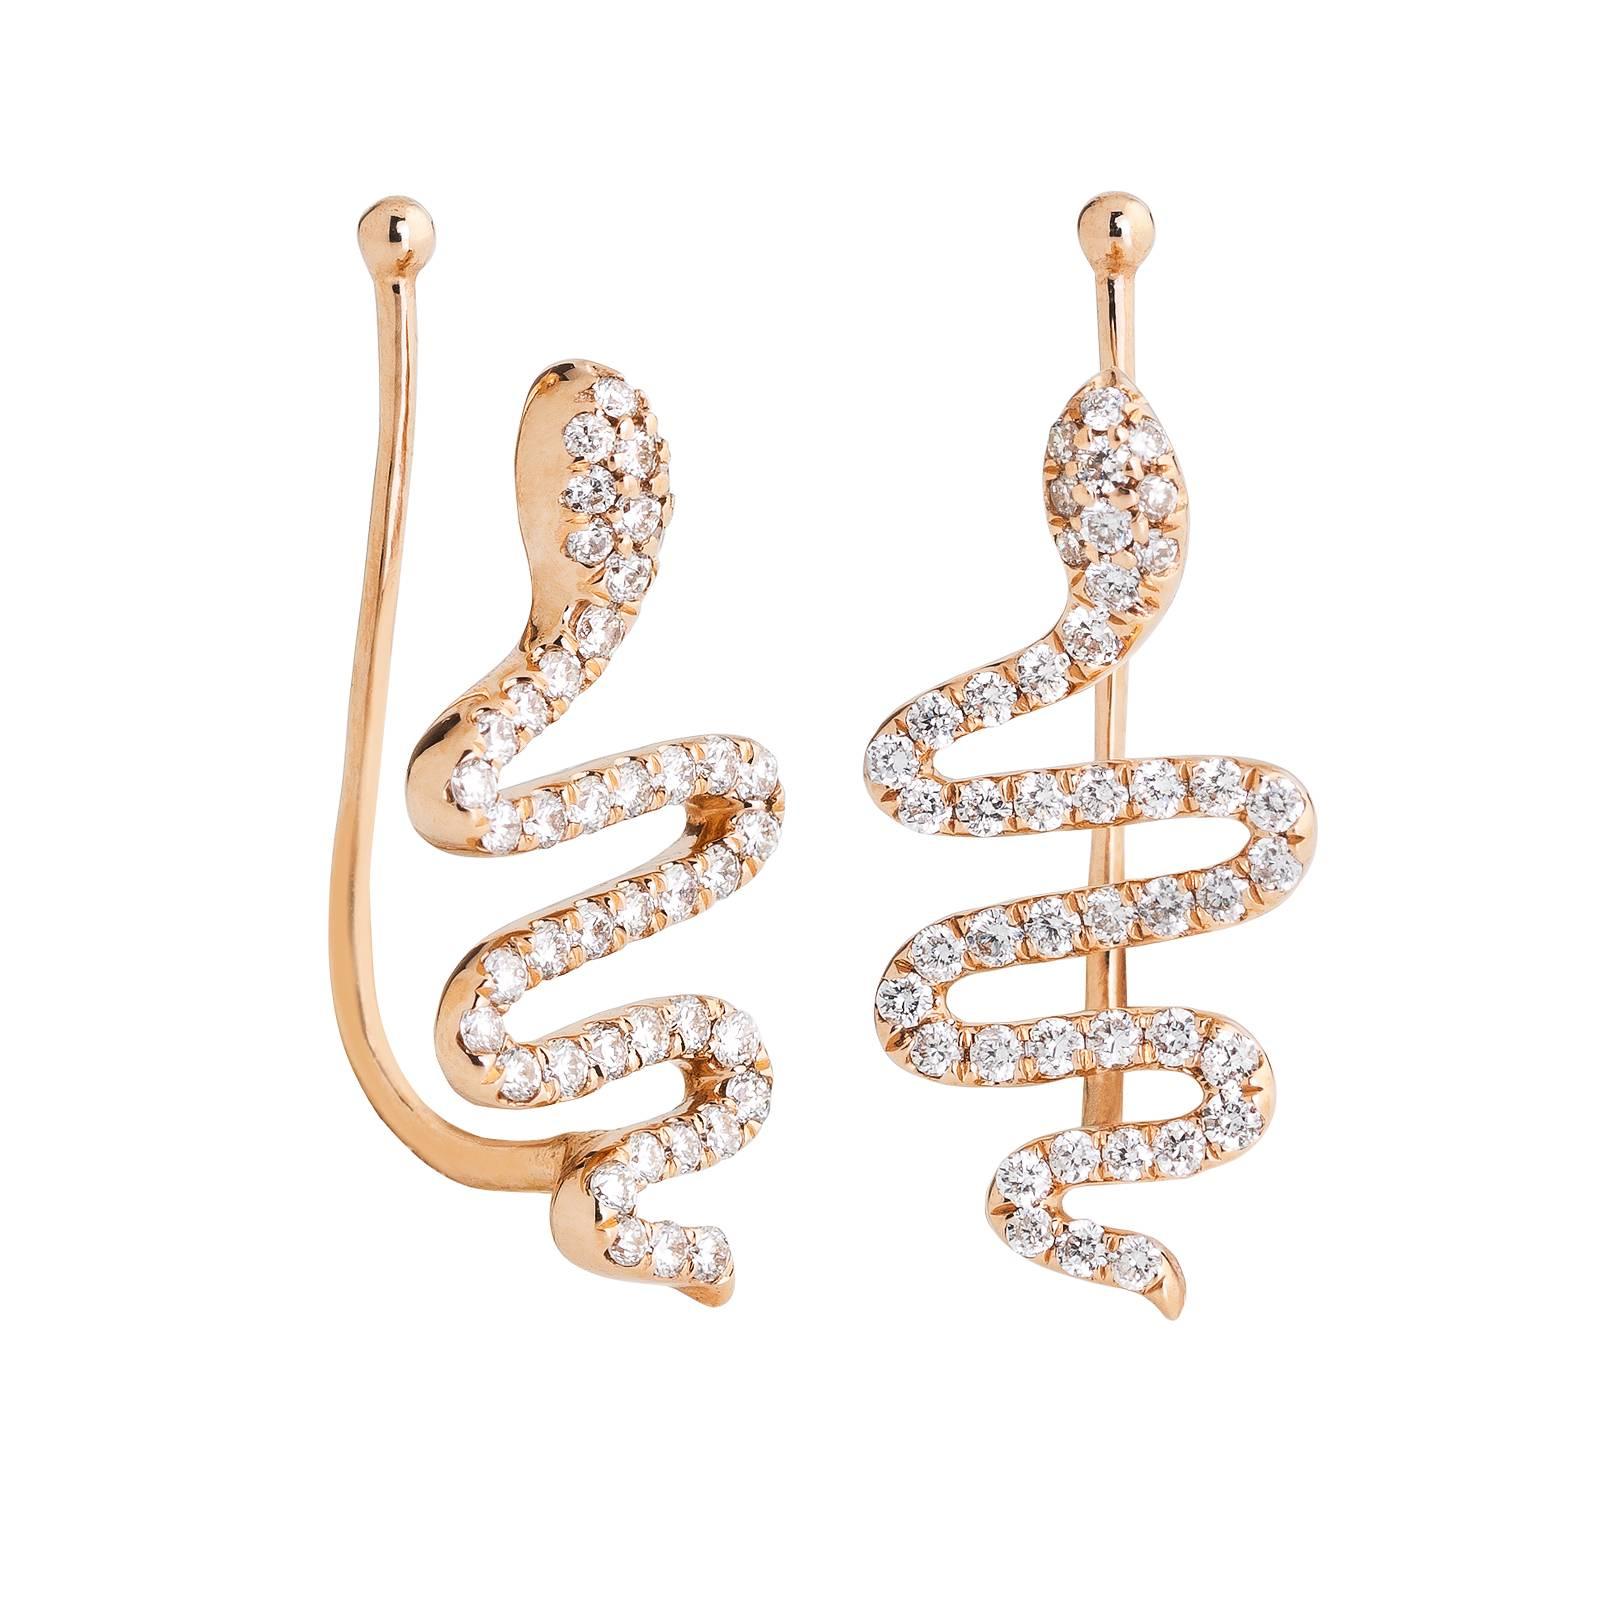 18 Karat Rose Gold Snake with 54 White Diamonds 0.33 Carat Ear Cuff Earrings For Sale